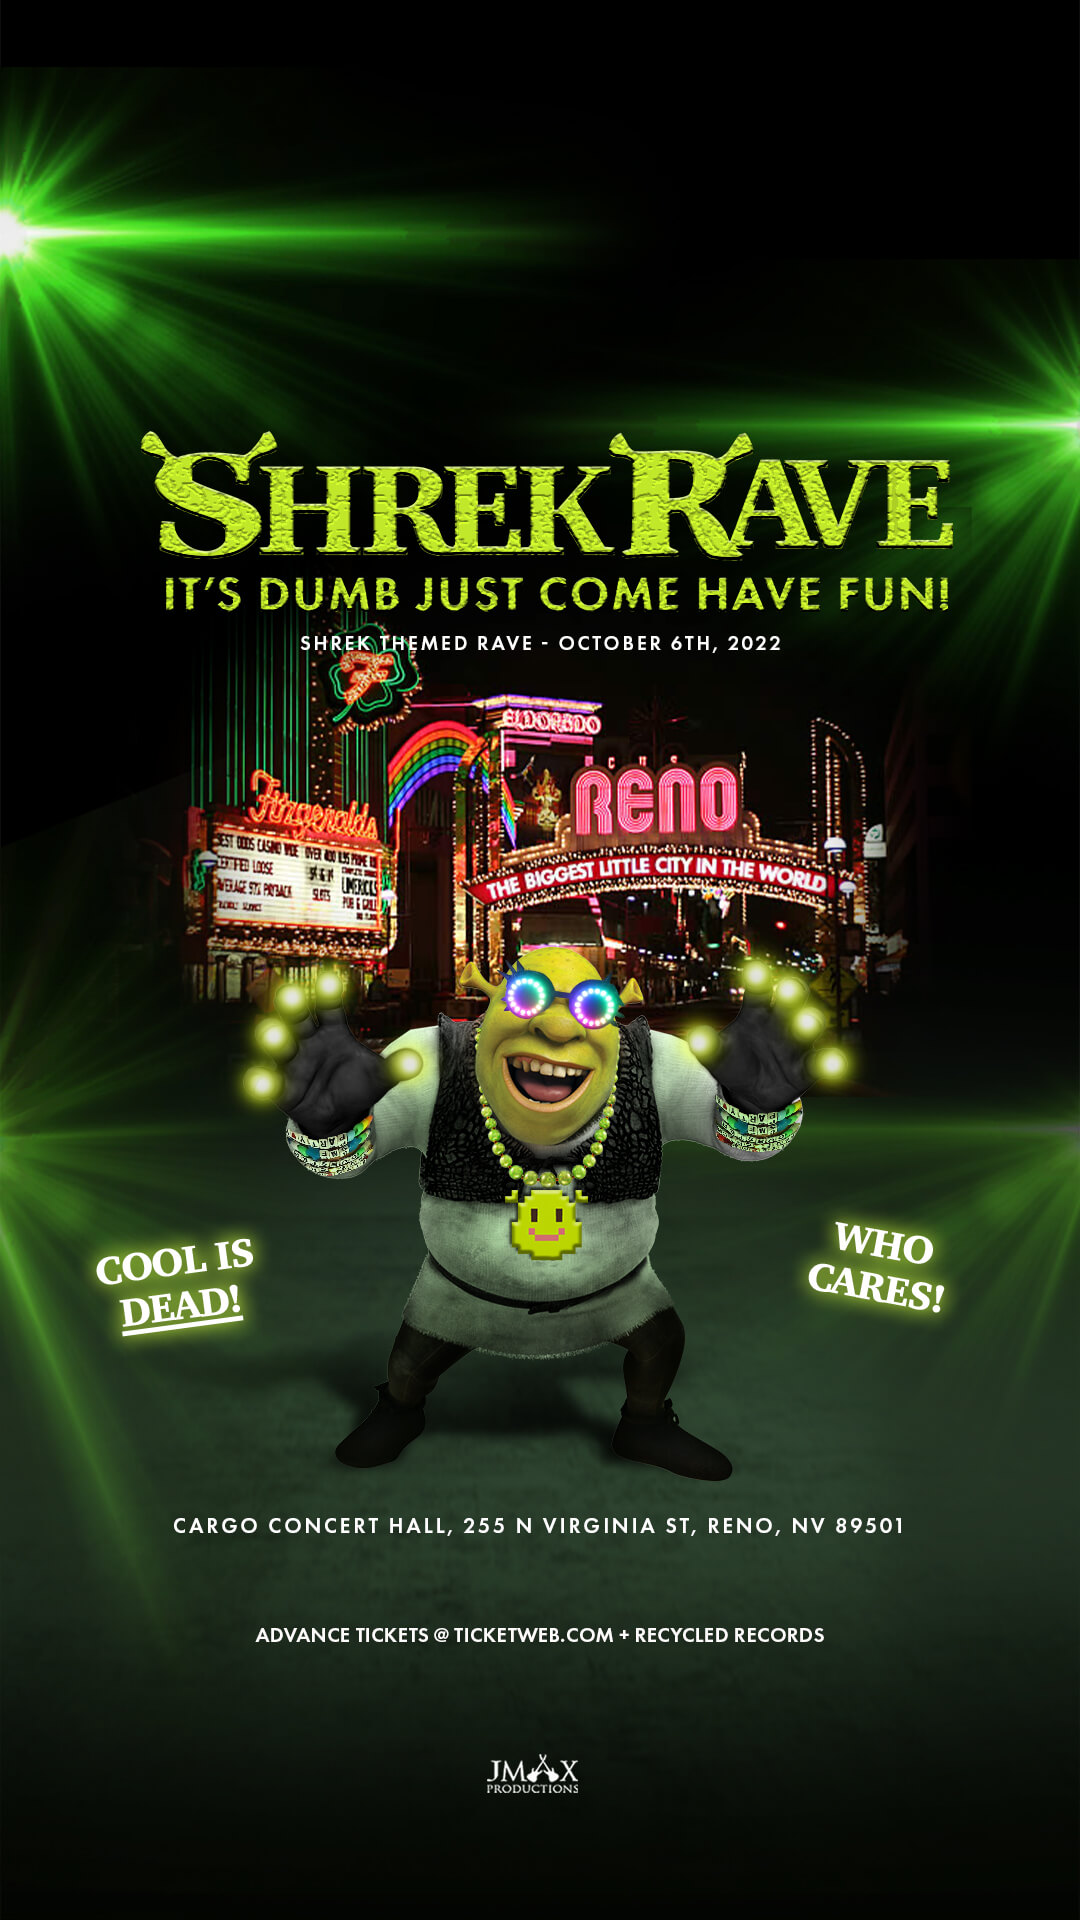 Shrek Rave Cargo Concert Hall Nevada Events